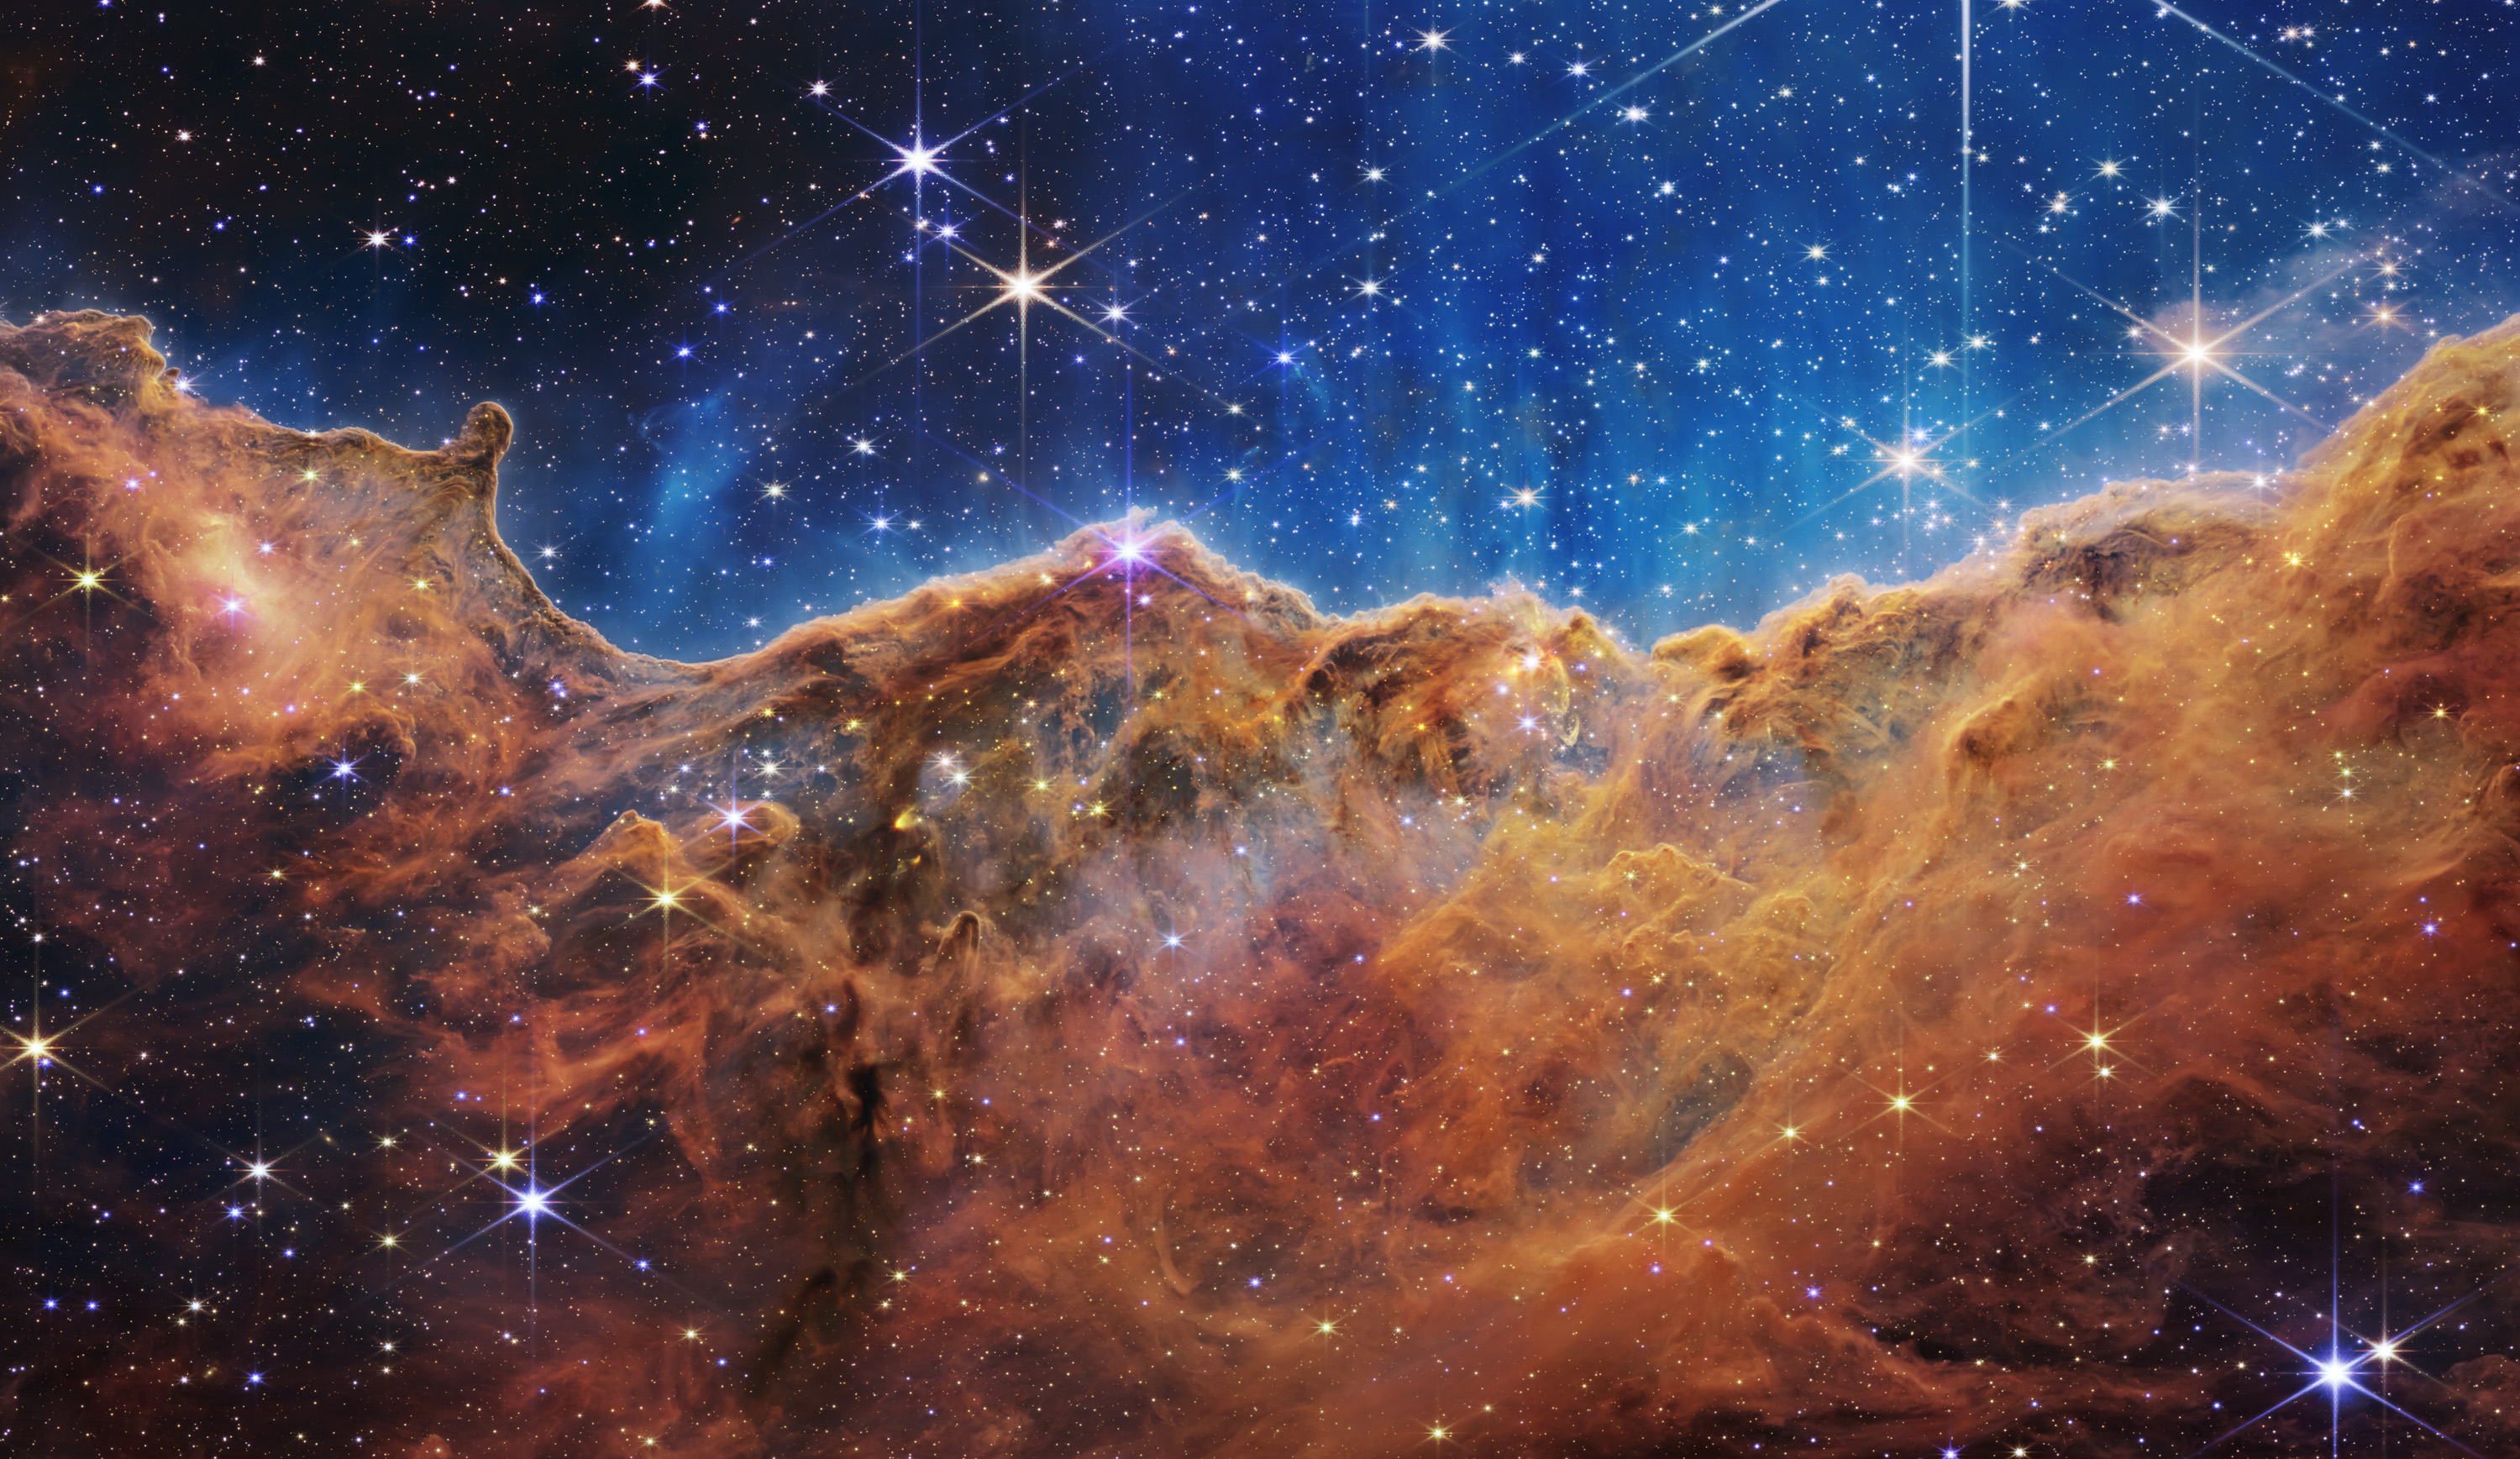 Carina Nebula image from JWST